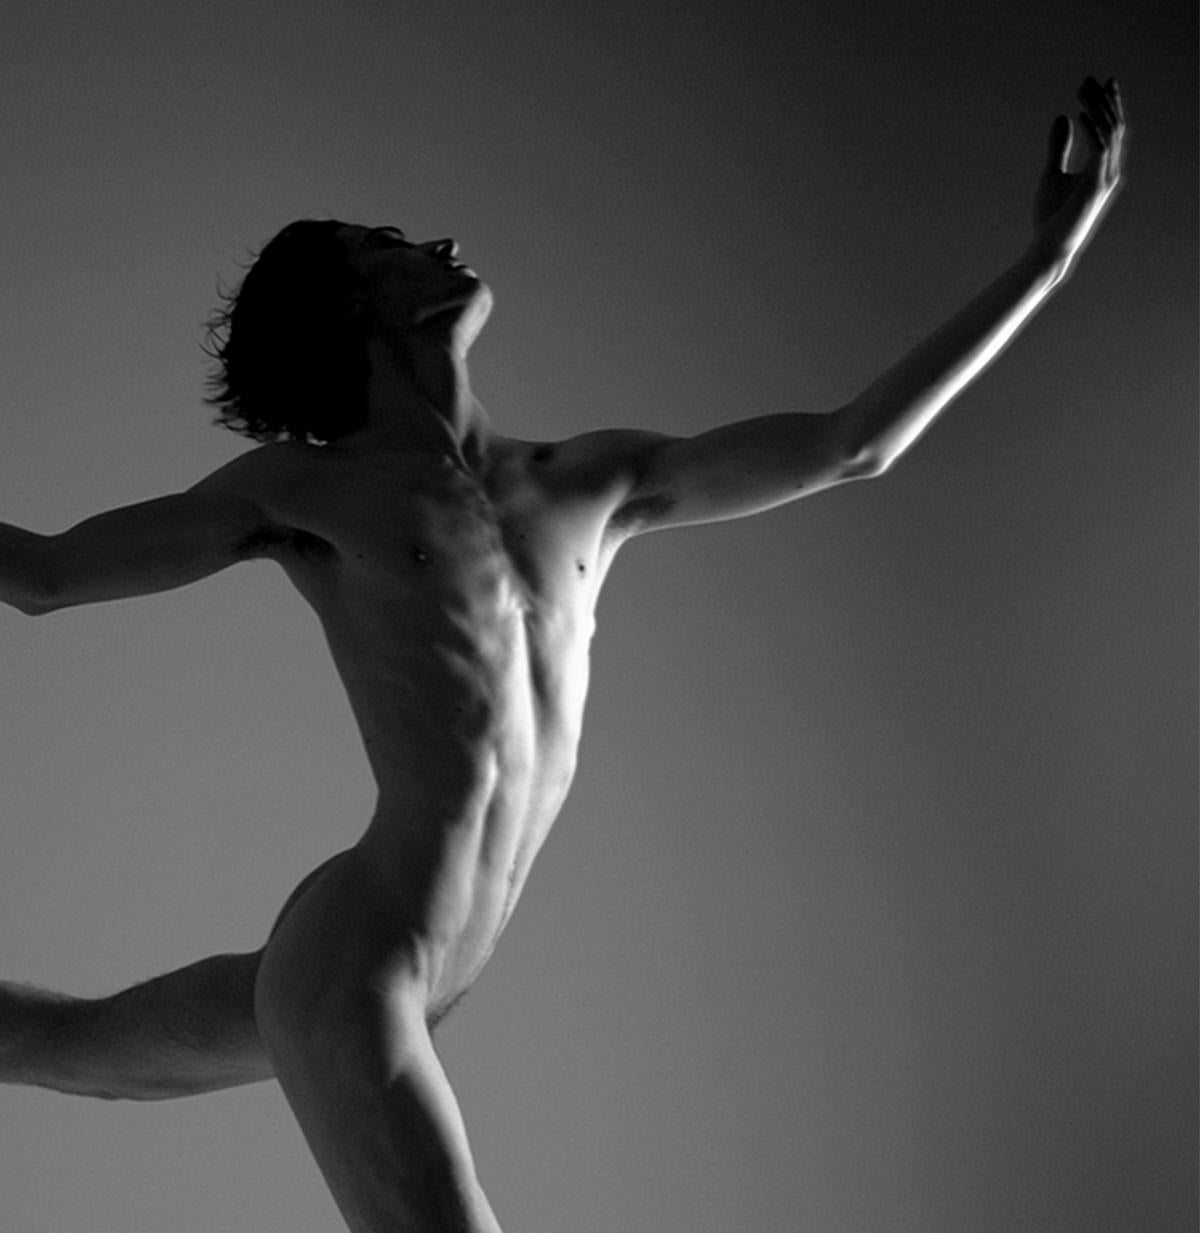 Apertura. The Bailarín, series. Male Nude dancer. Black & White photograph - Photograph by Ricky Cohete